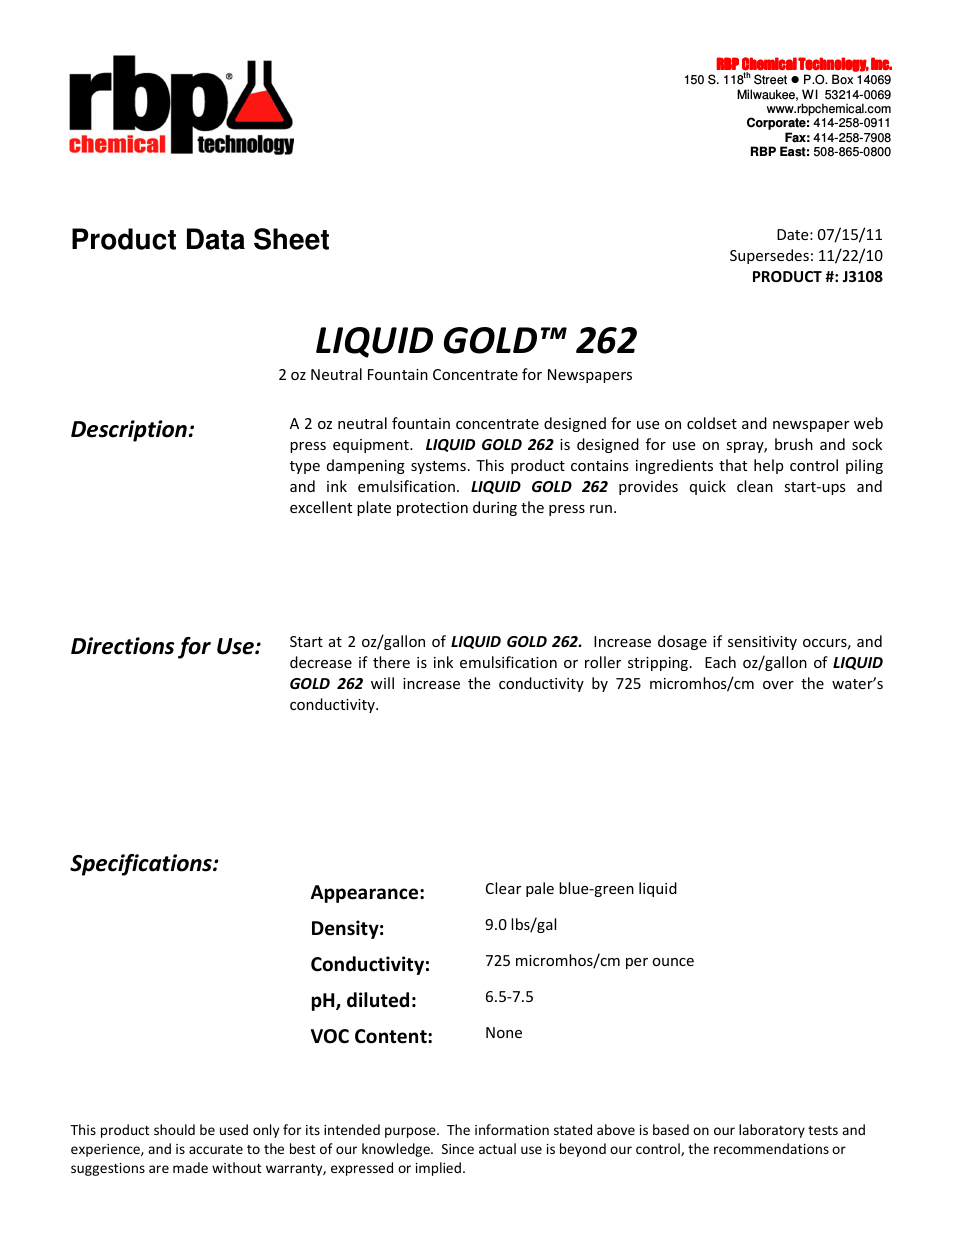 J3108 LIQUID GOLD 262